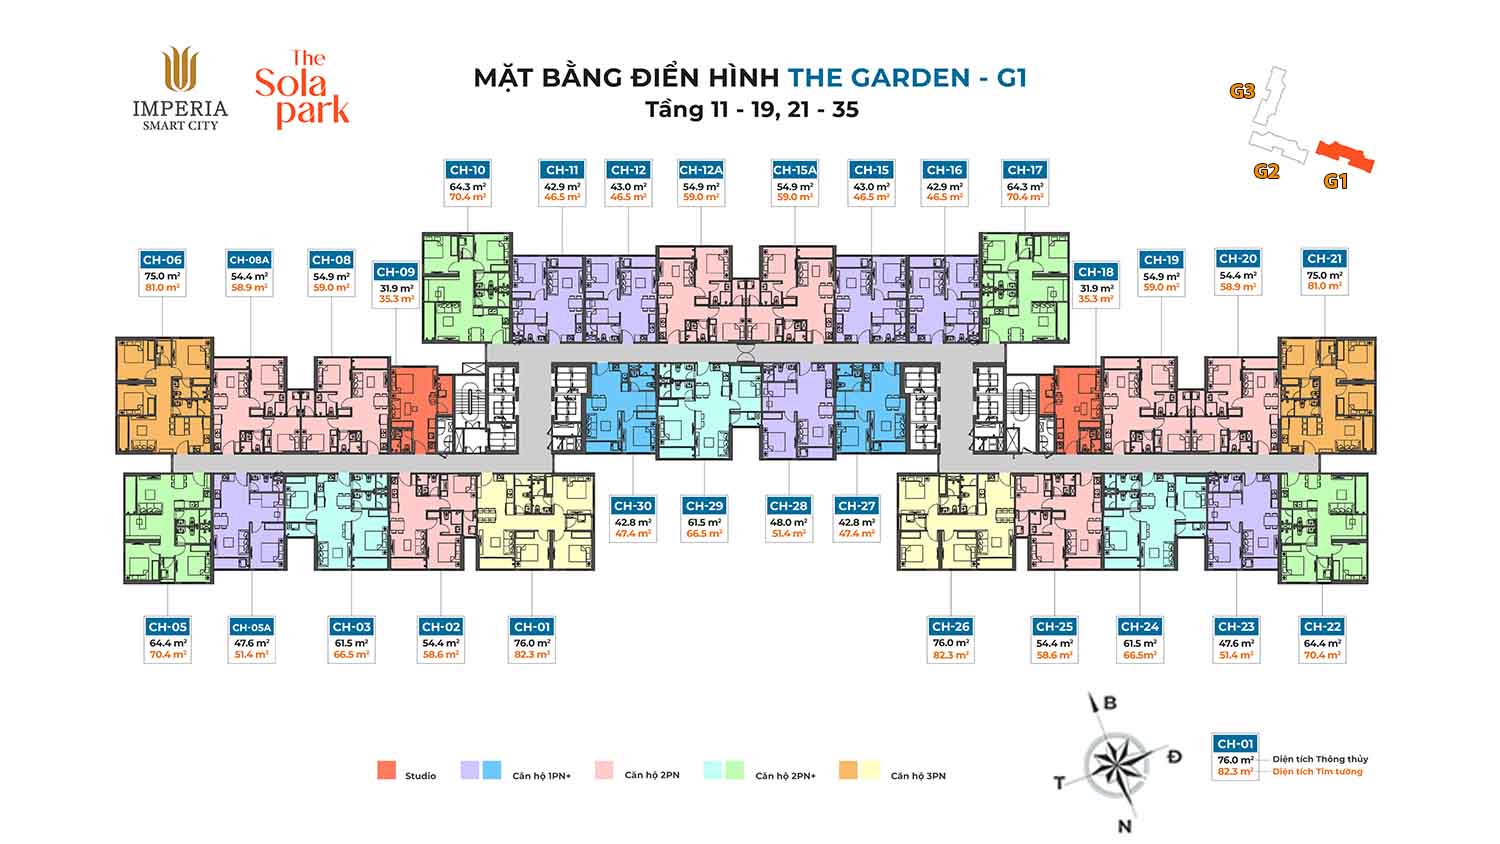 G1-the-Garden-mat-bang-tang-dien-hinh-tang-11-19-21-35-Imperia-Smart-City-2-The-Sola-Park-W1500